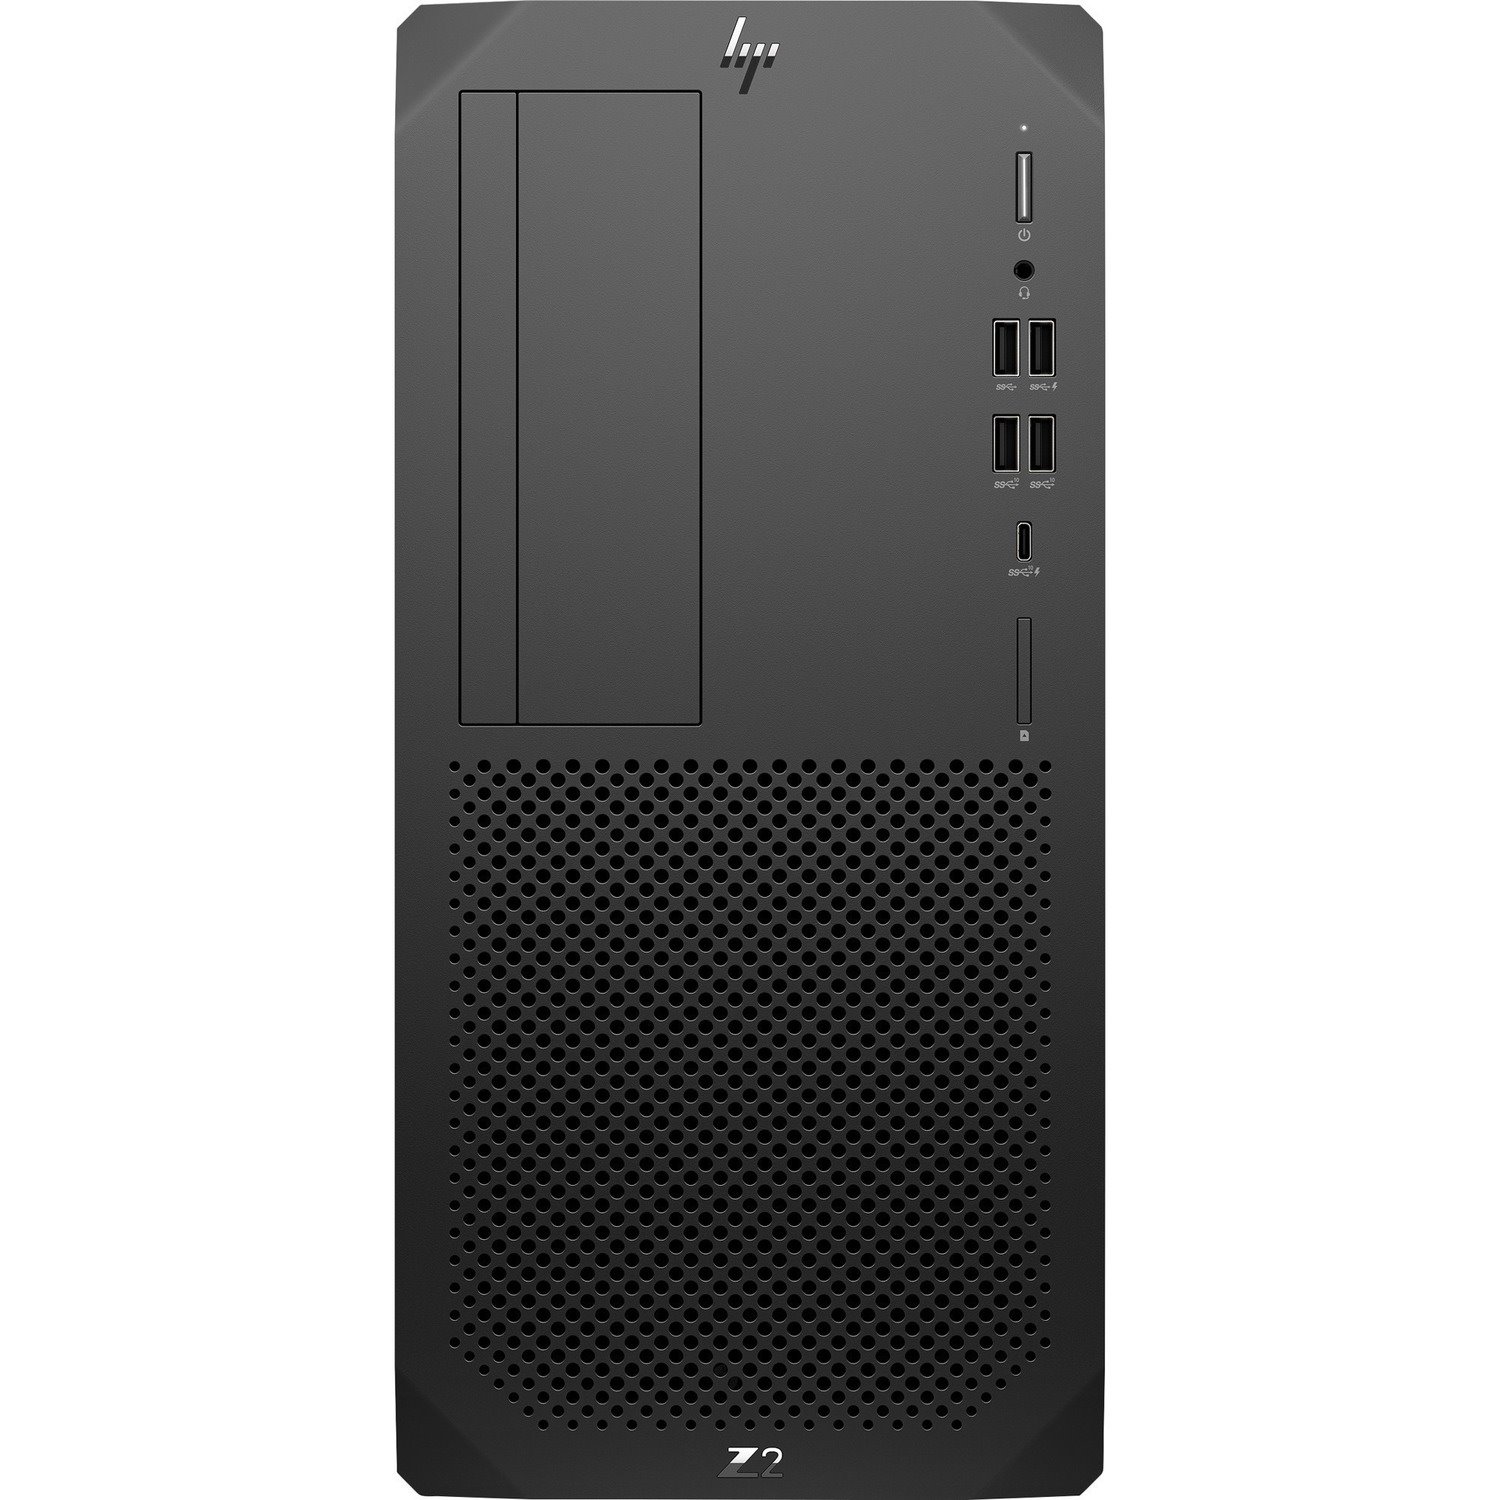 HP Z2 G5 Workstation - 1 x Intel Core i7 10th Gen i7-10700K - 16 GB - 512 GB SSD - Tower - Black